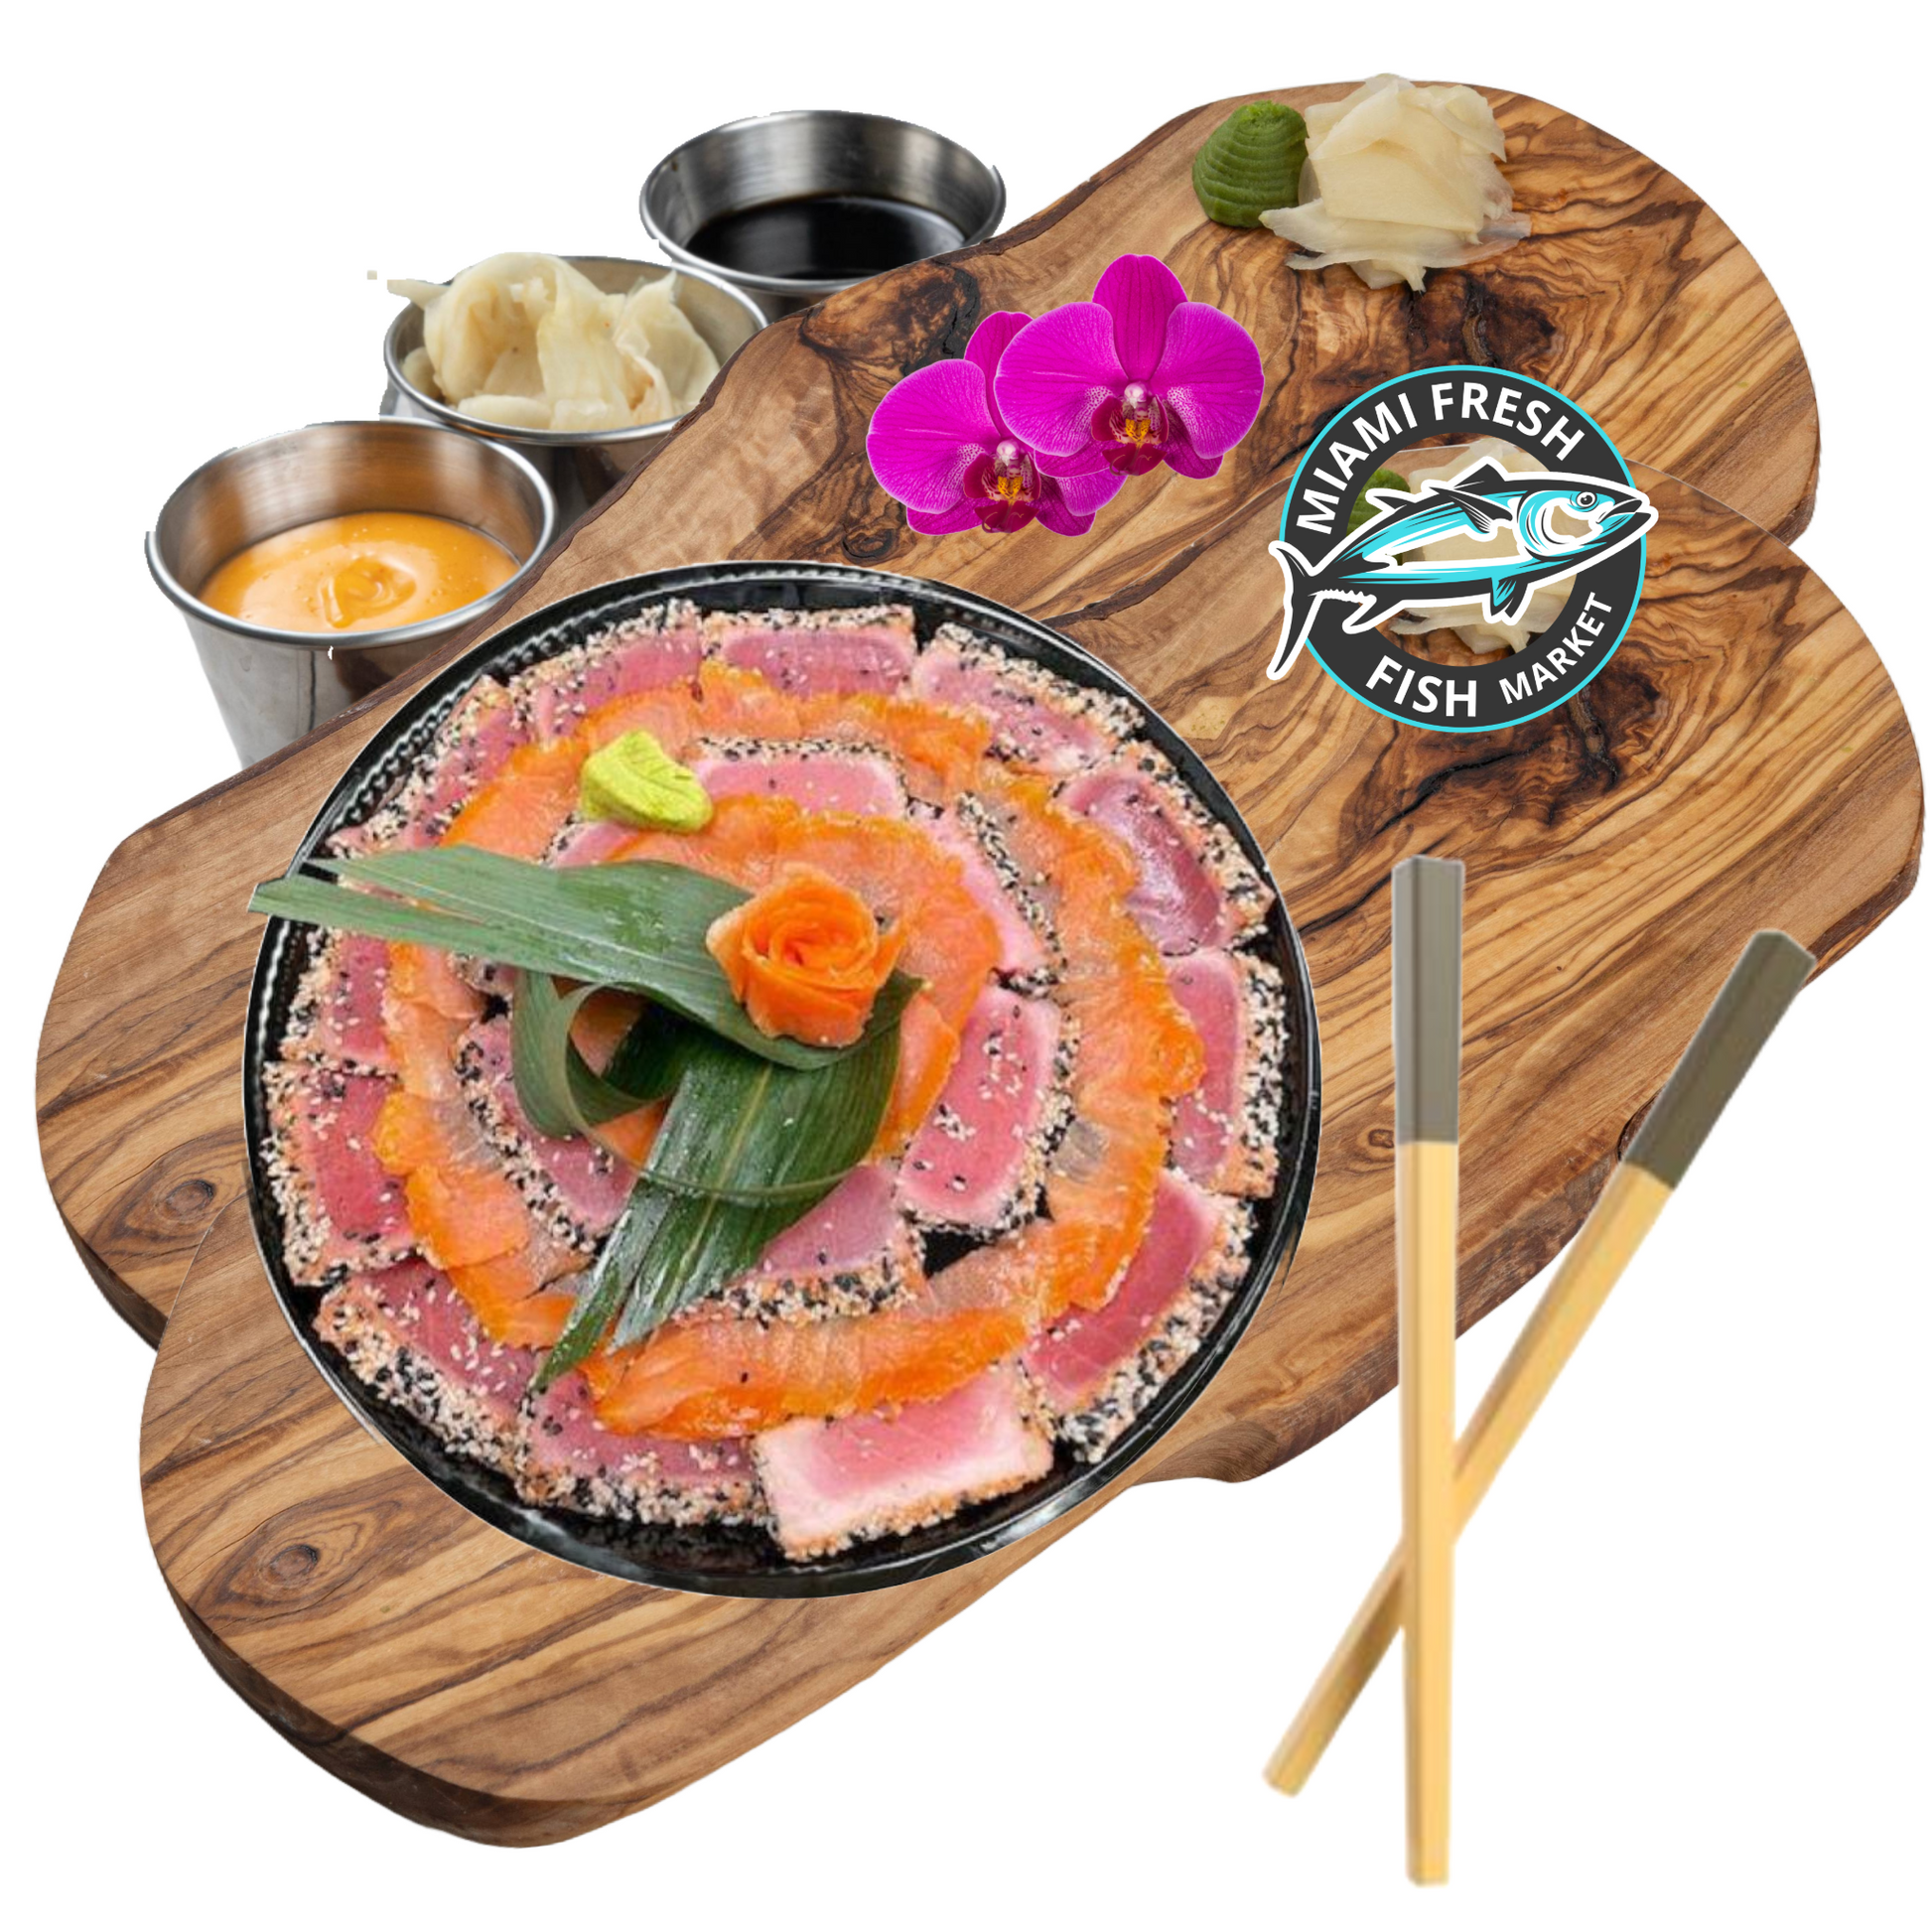 Platter-Seared-Tuna-cut-slice-on-brown-wood-plate-miami-fresh-fish-market